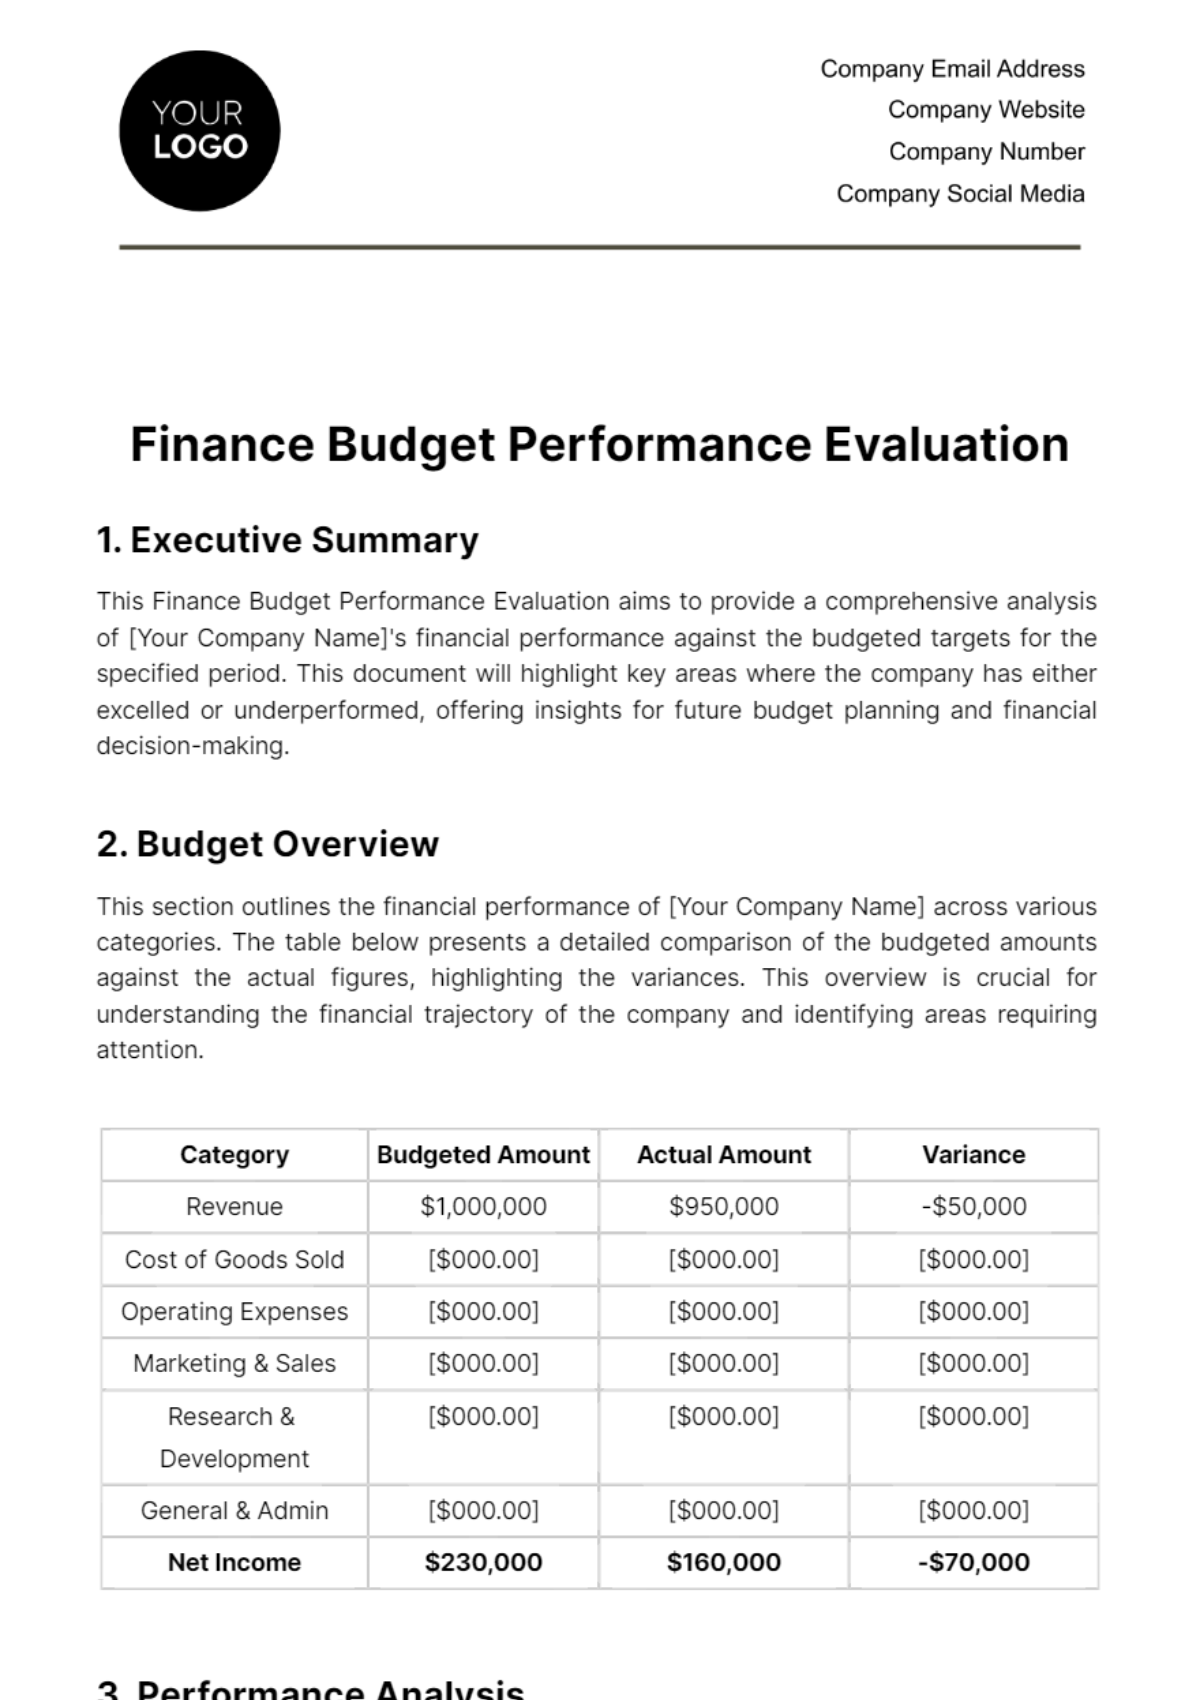 Finance Budget Performance Evaluation Template